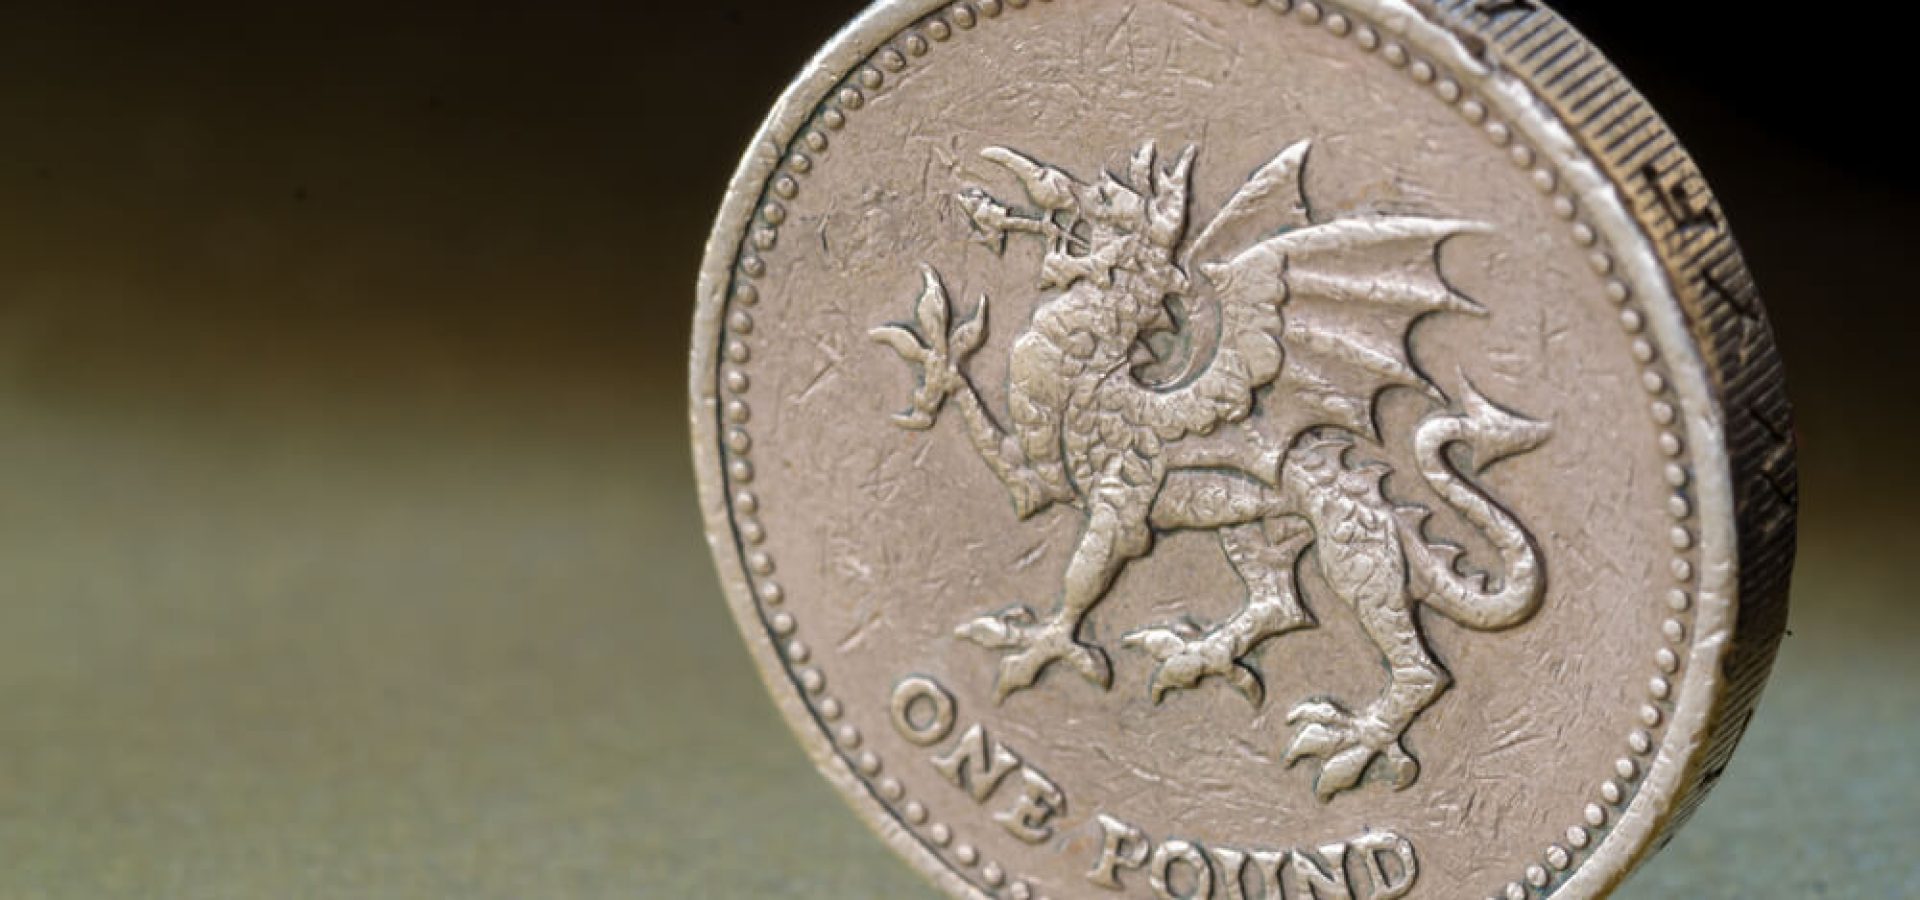 close up shot of one british pound